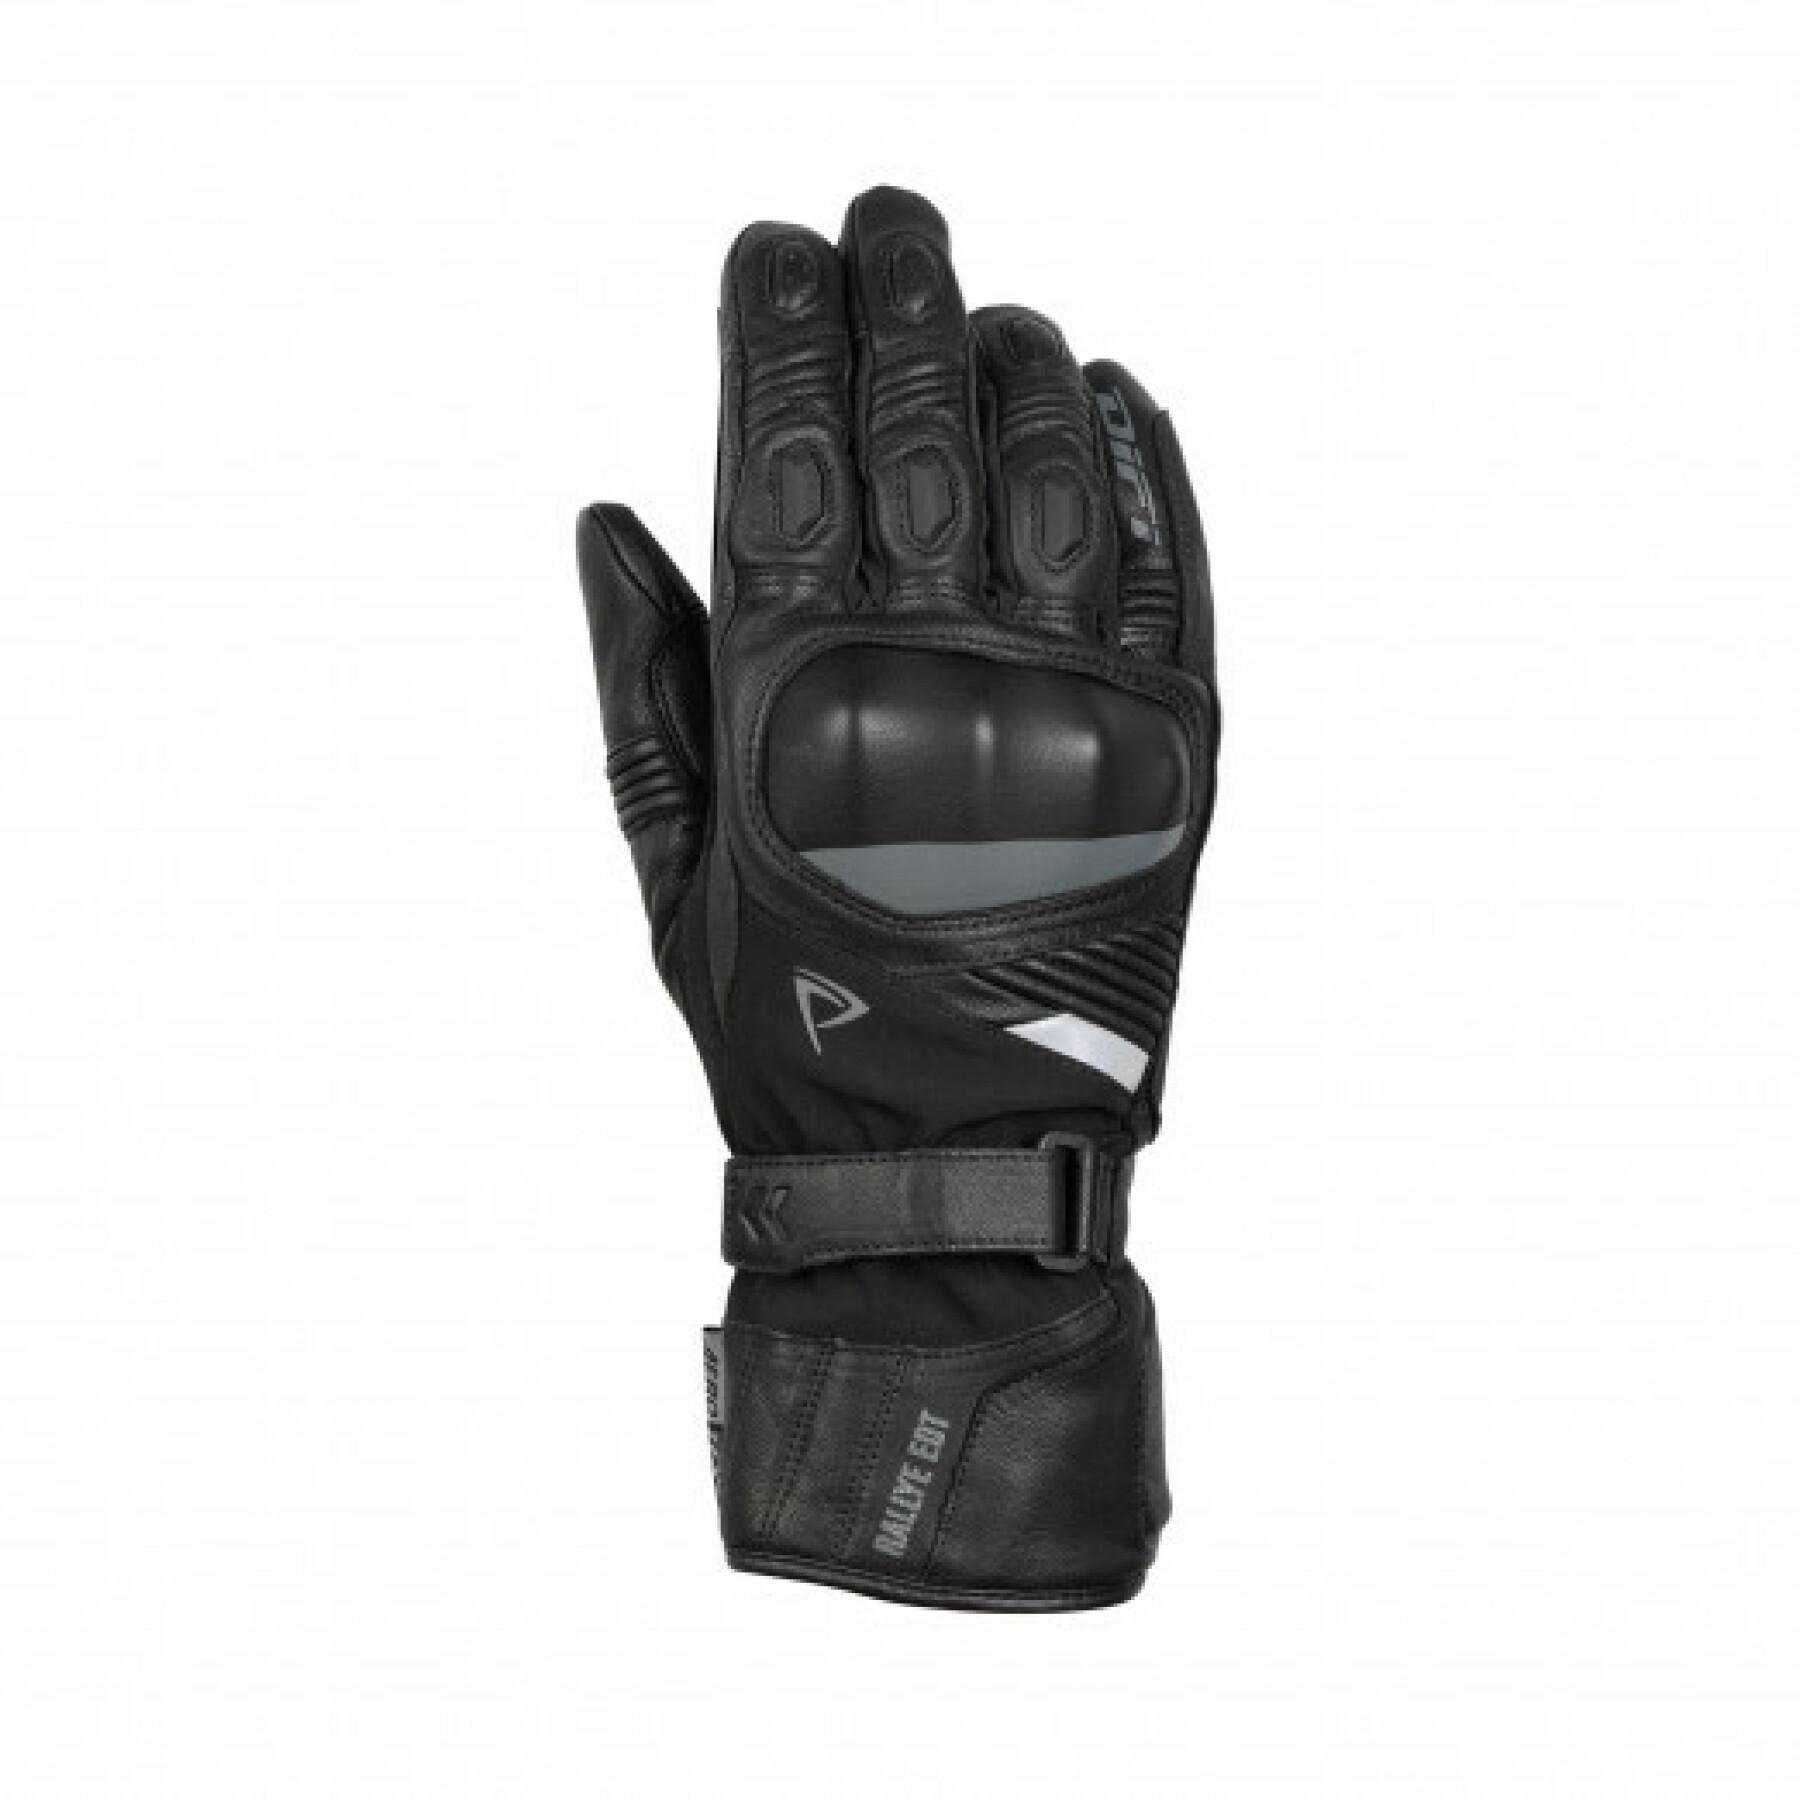 Heated motorcycle gloves Difi rallye edt aerotex